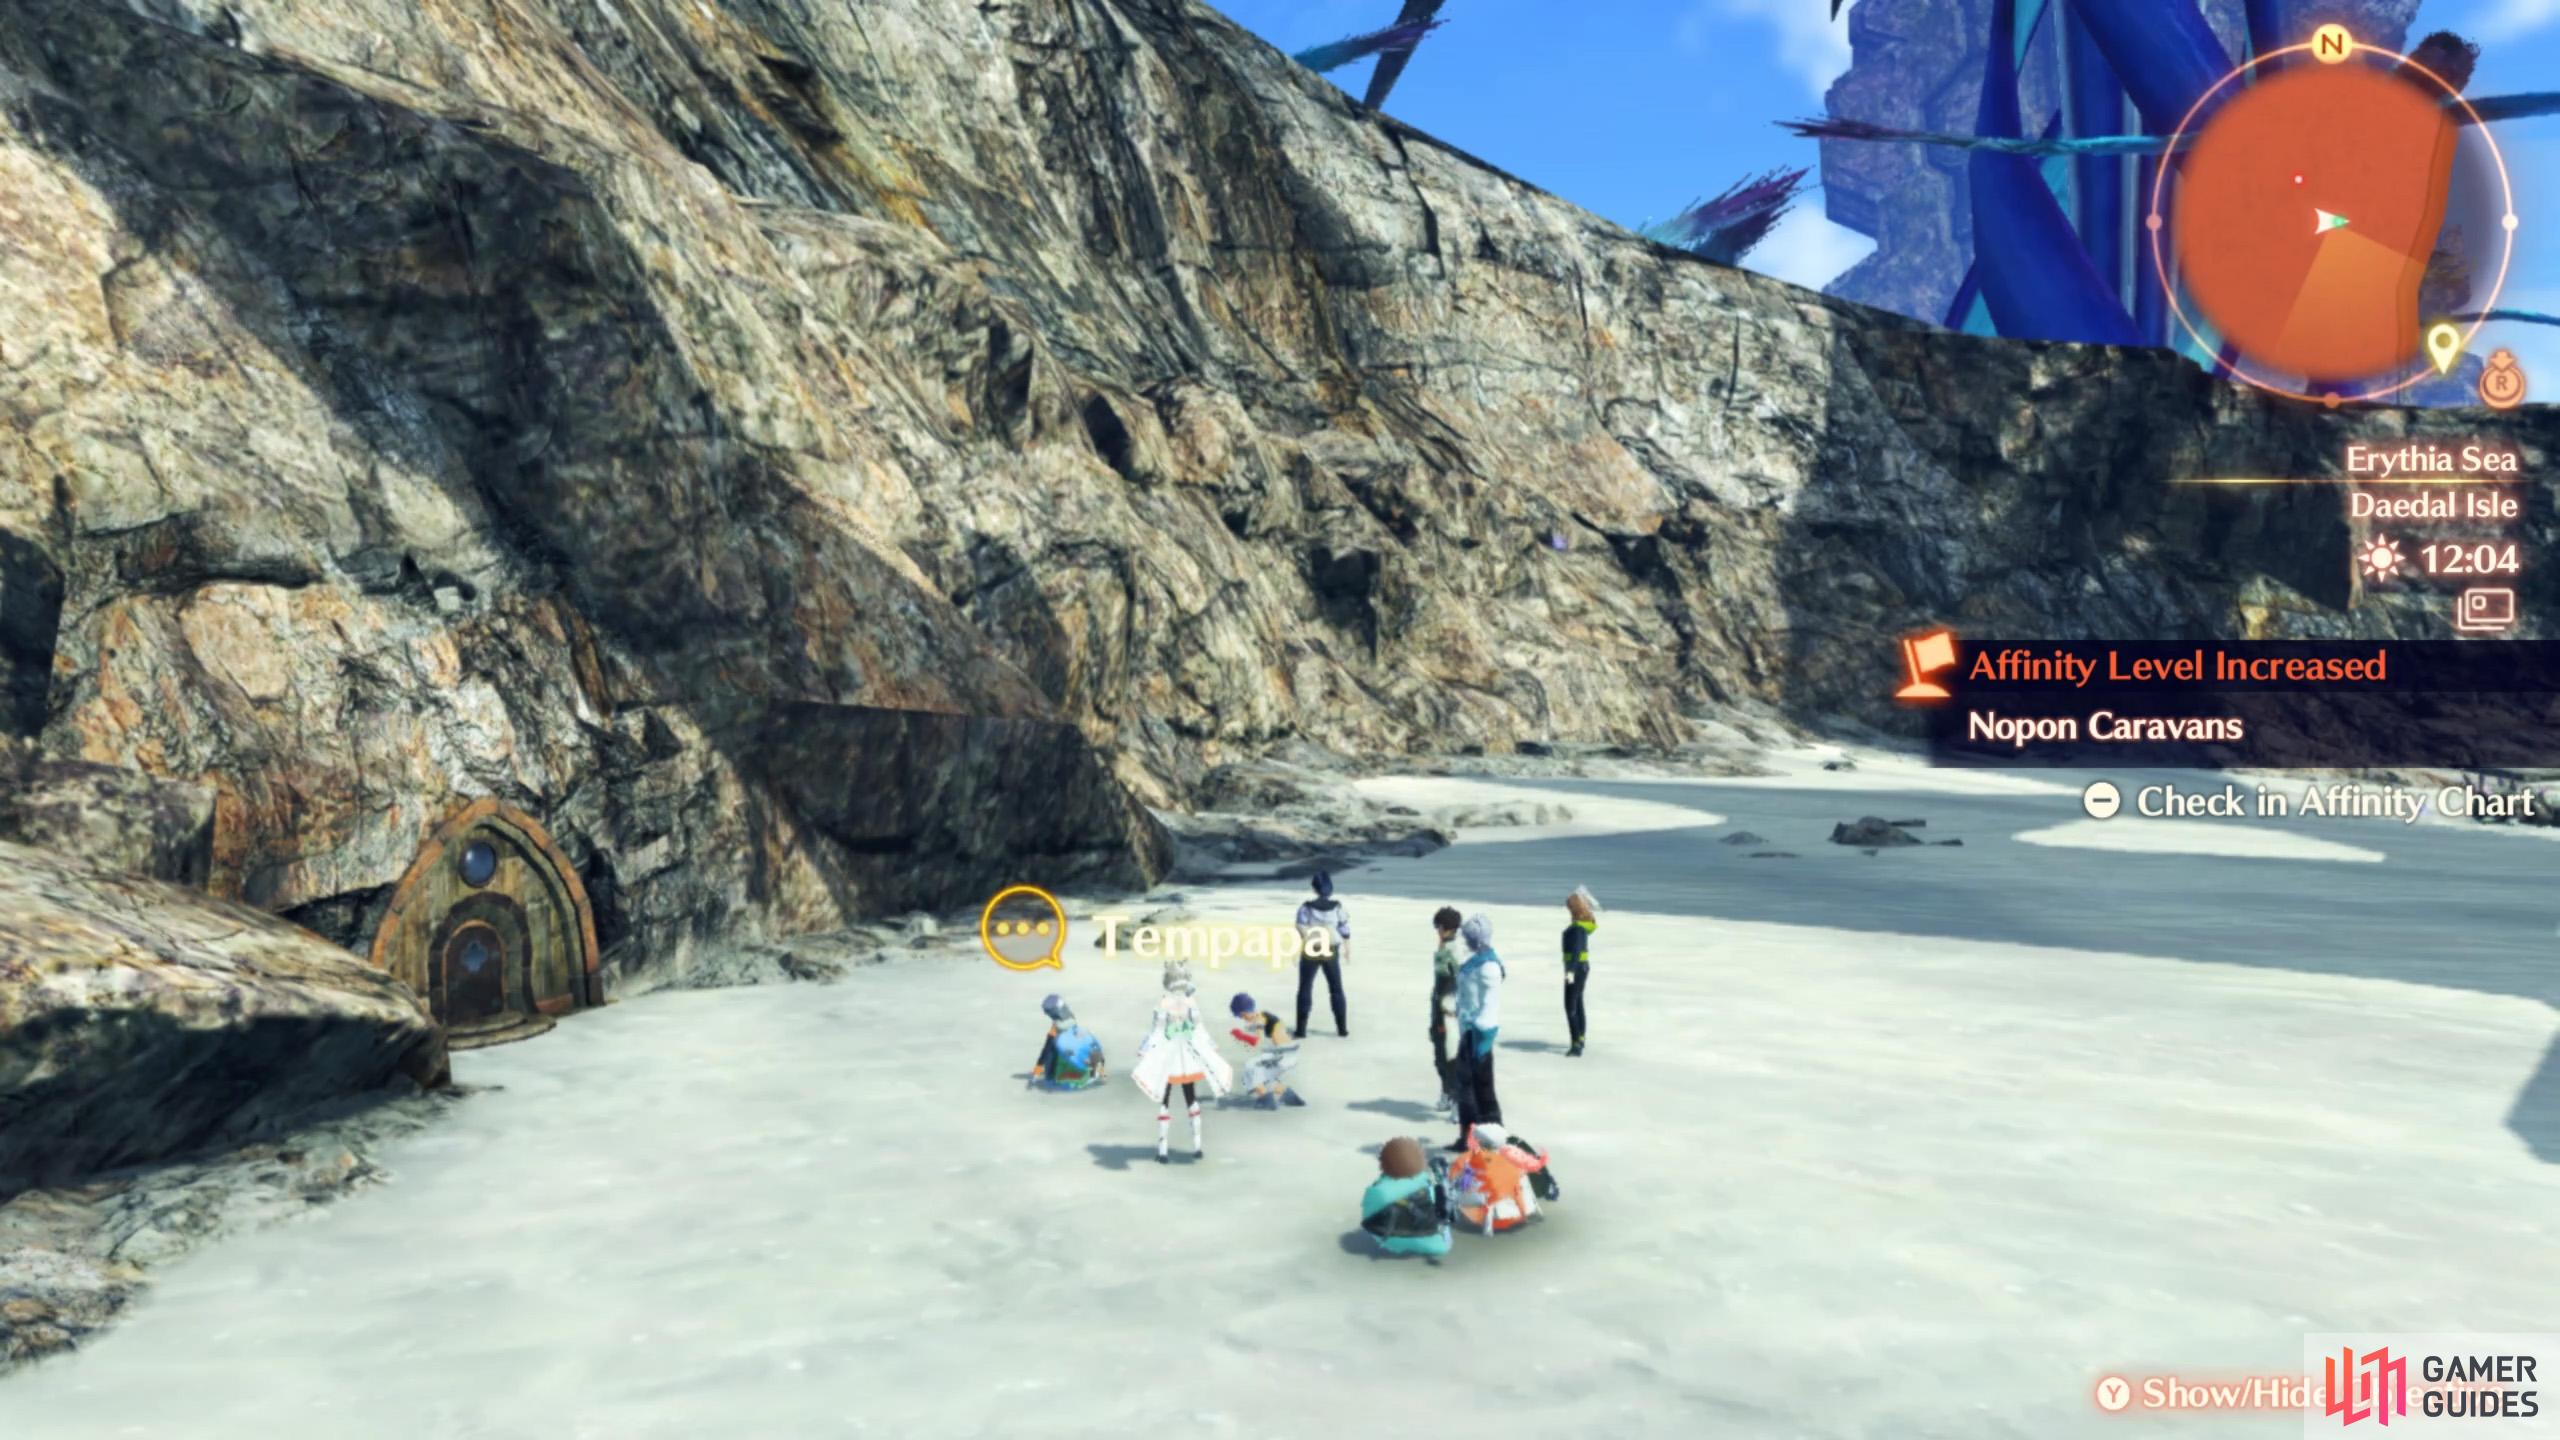 Tempapa: At Daedal Island, after Riku & Manana's Ascension Quest.